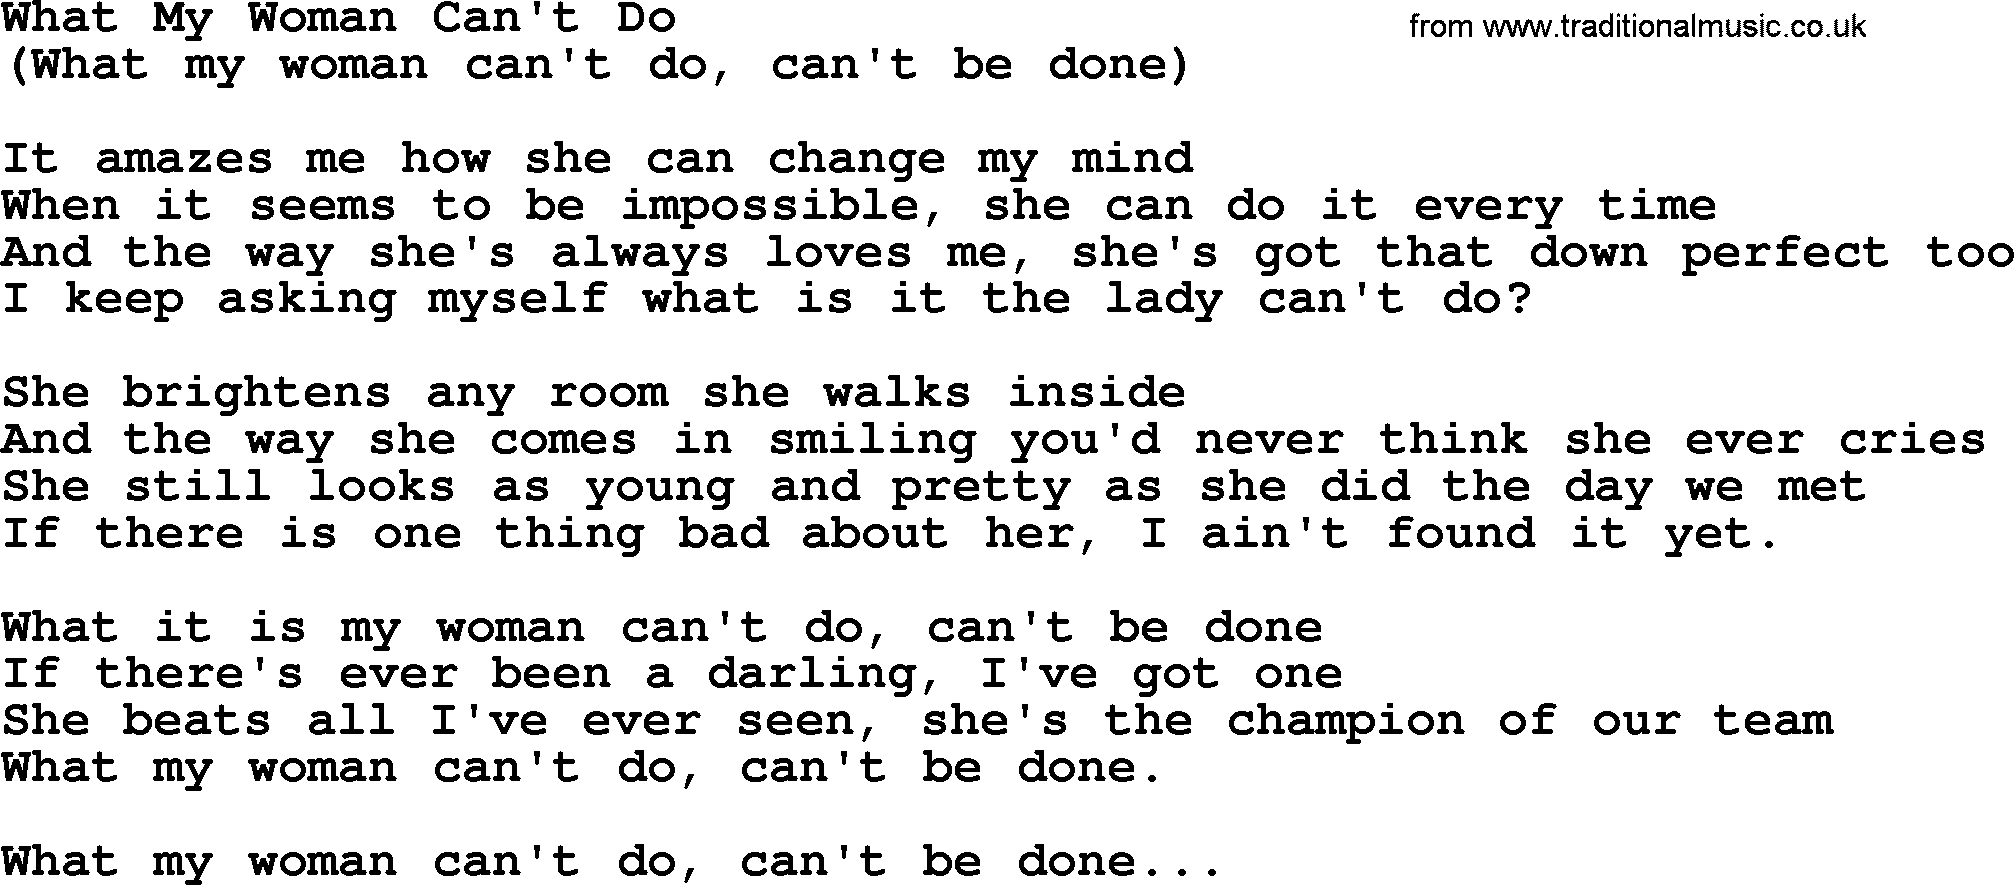 George Jones song: What My Woman Can't Do, lyrics